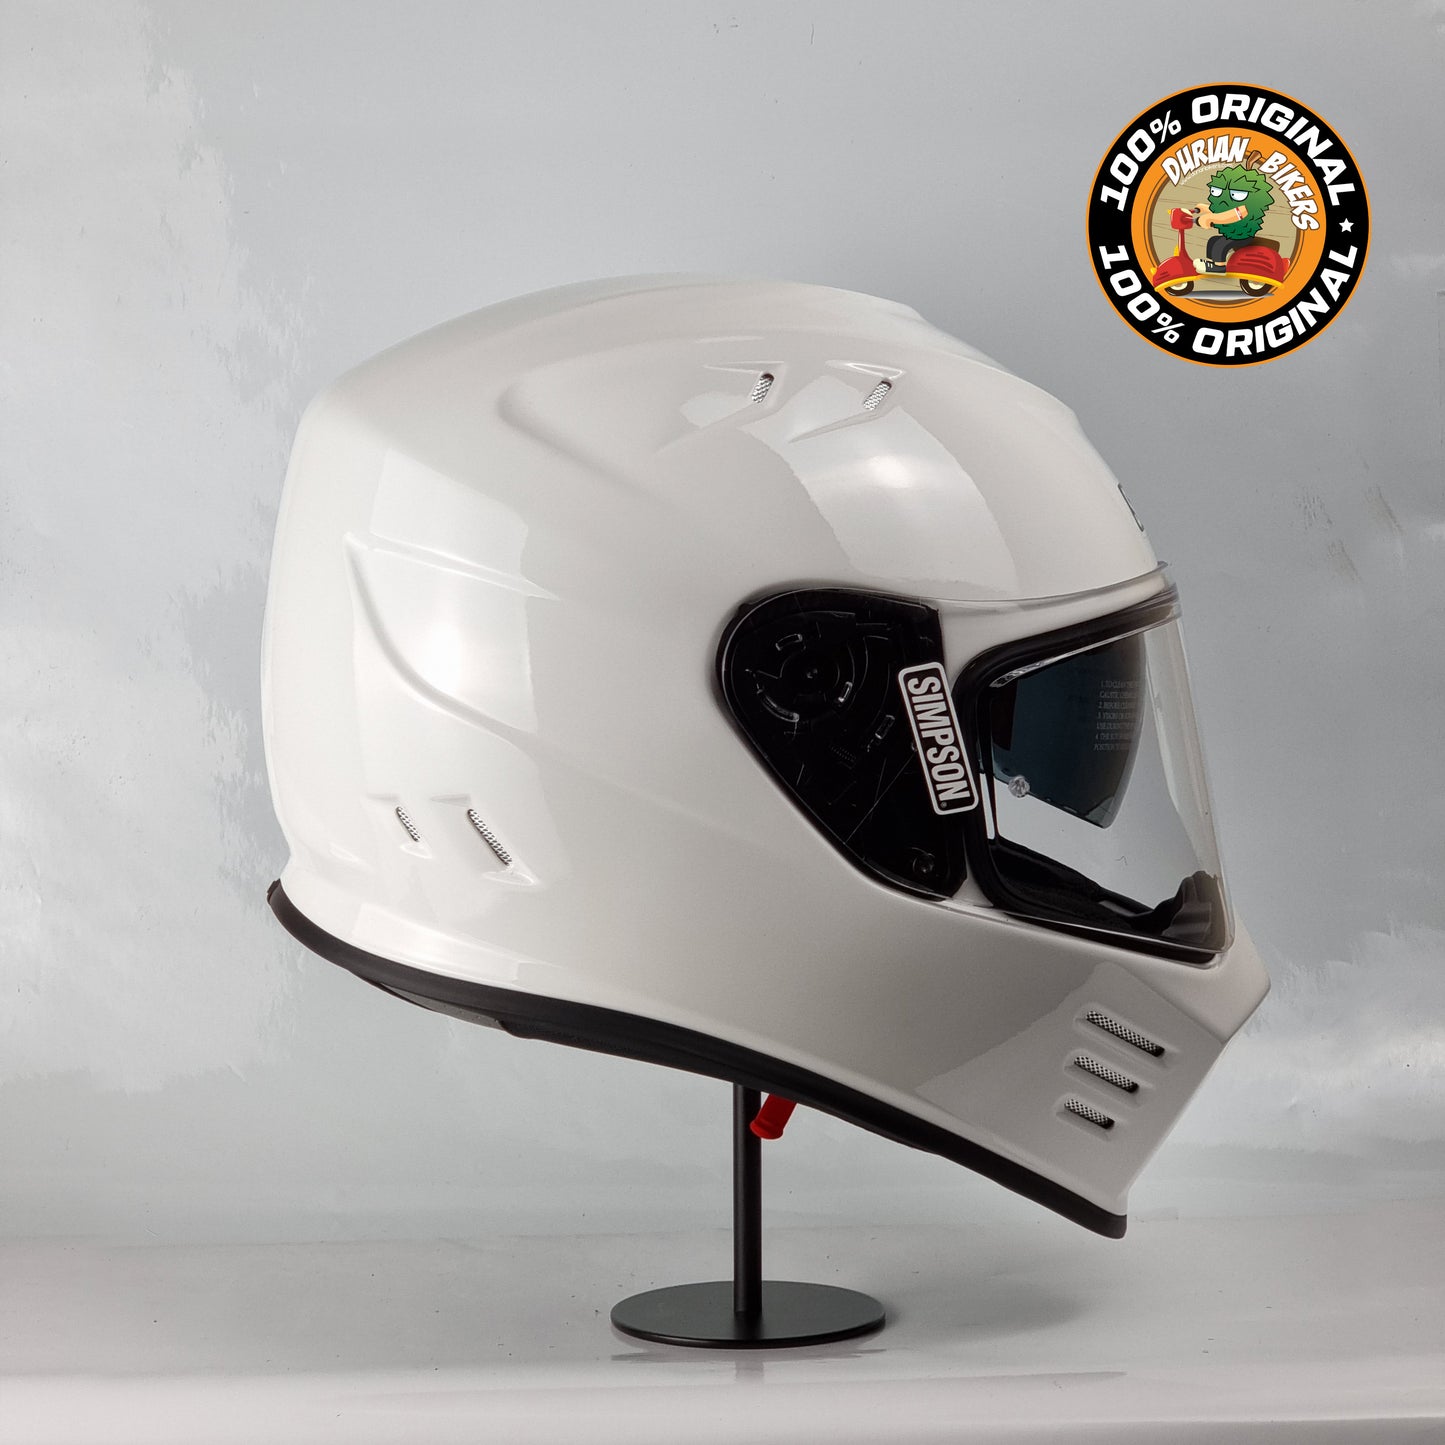 Simpson Helmet Venom Bandit (Gloss White)